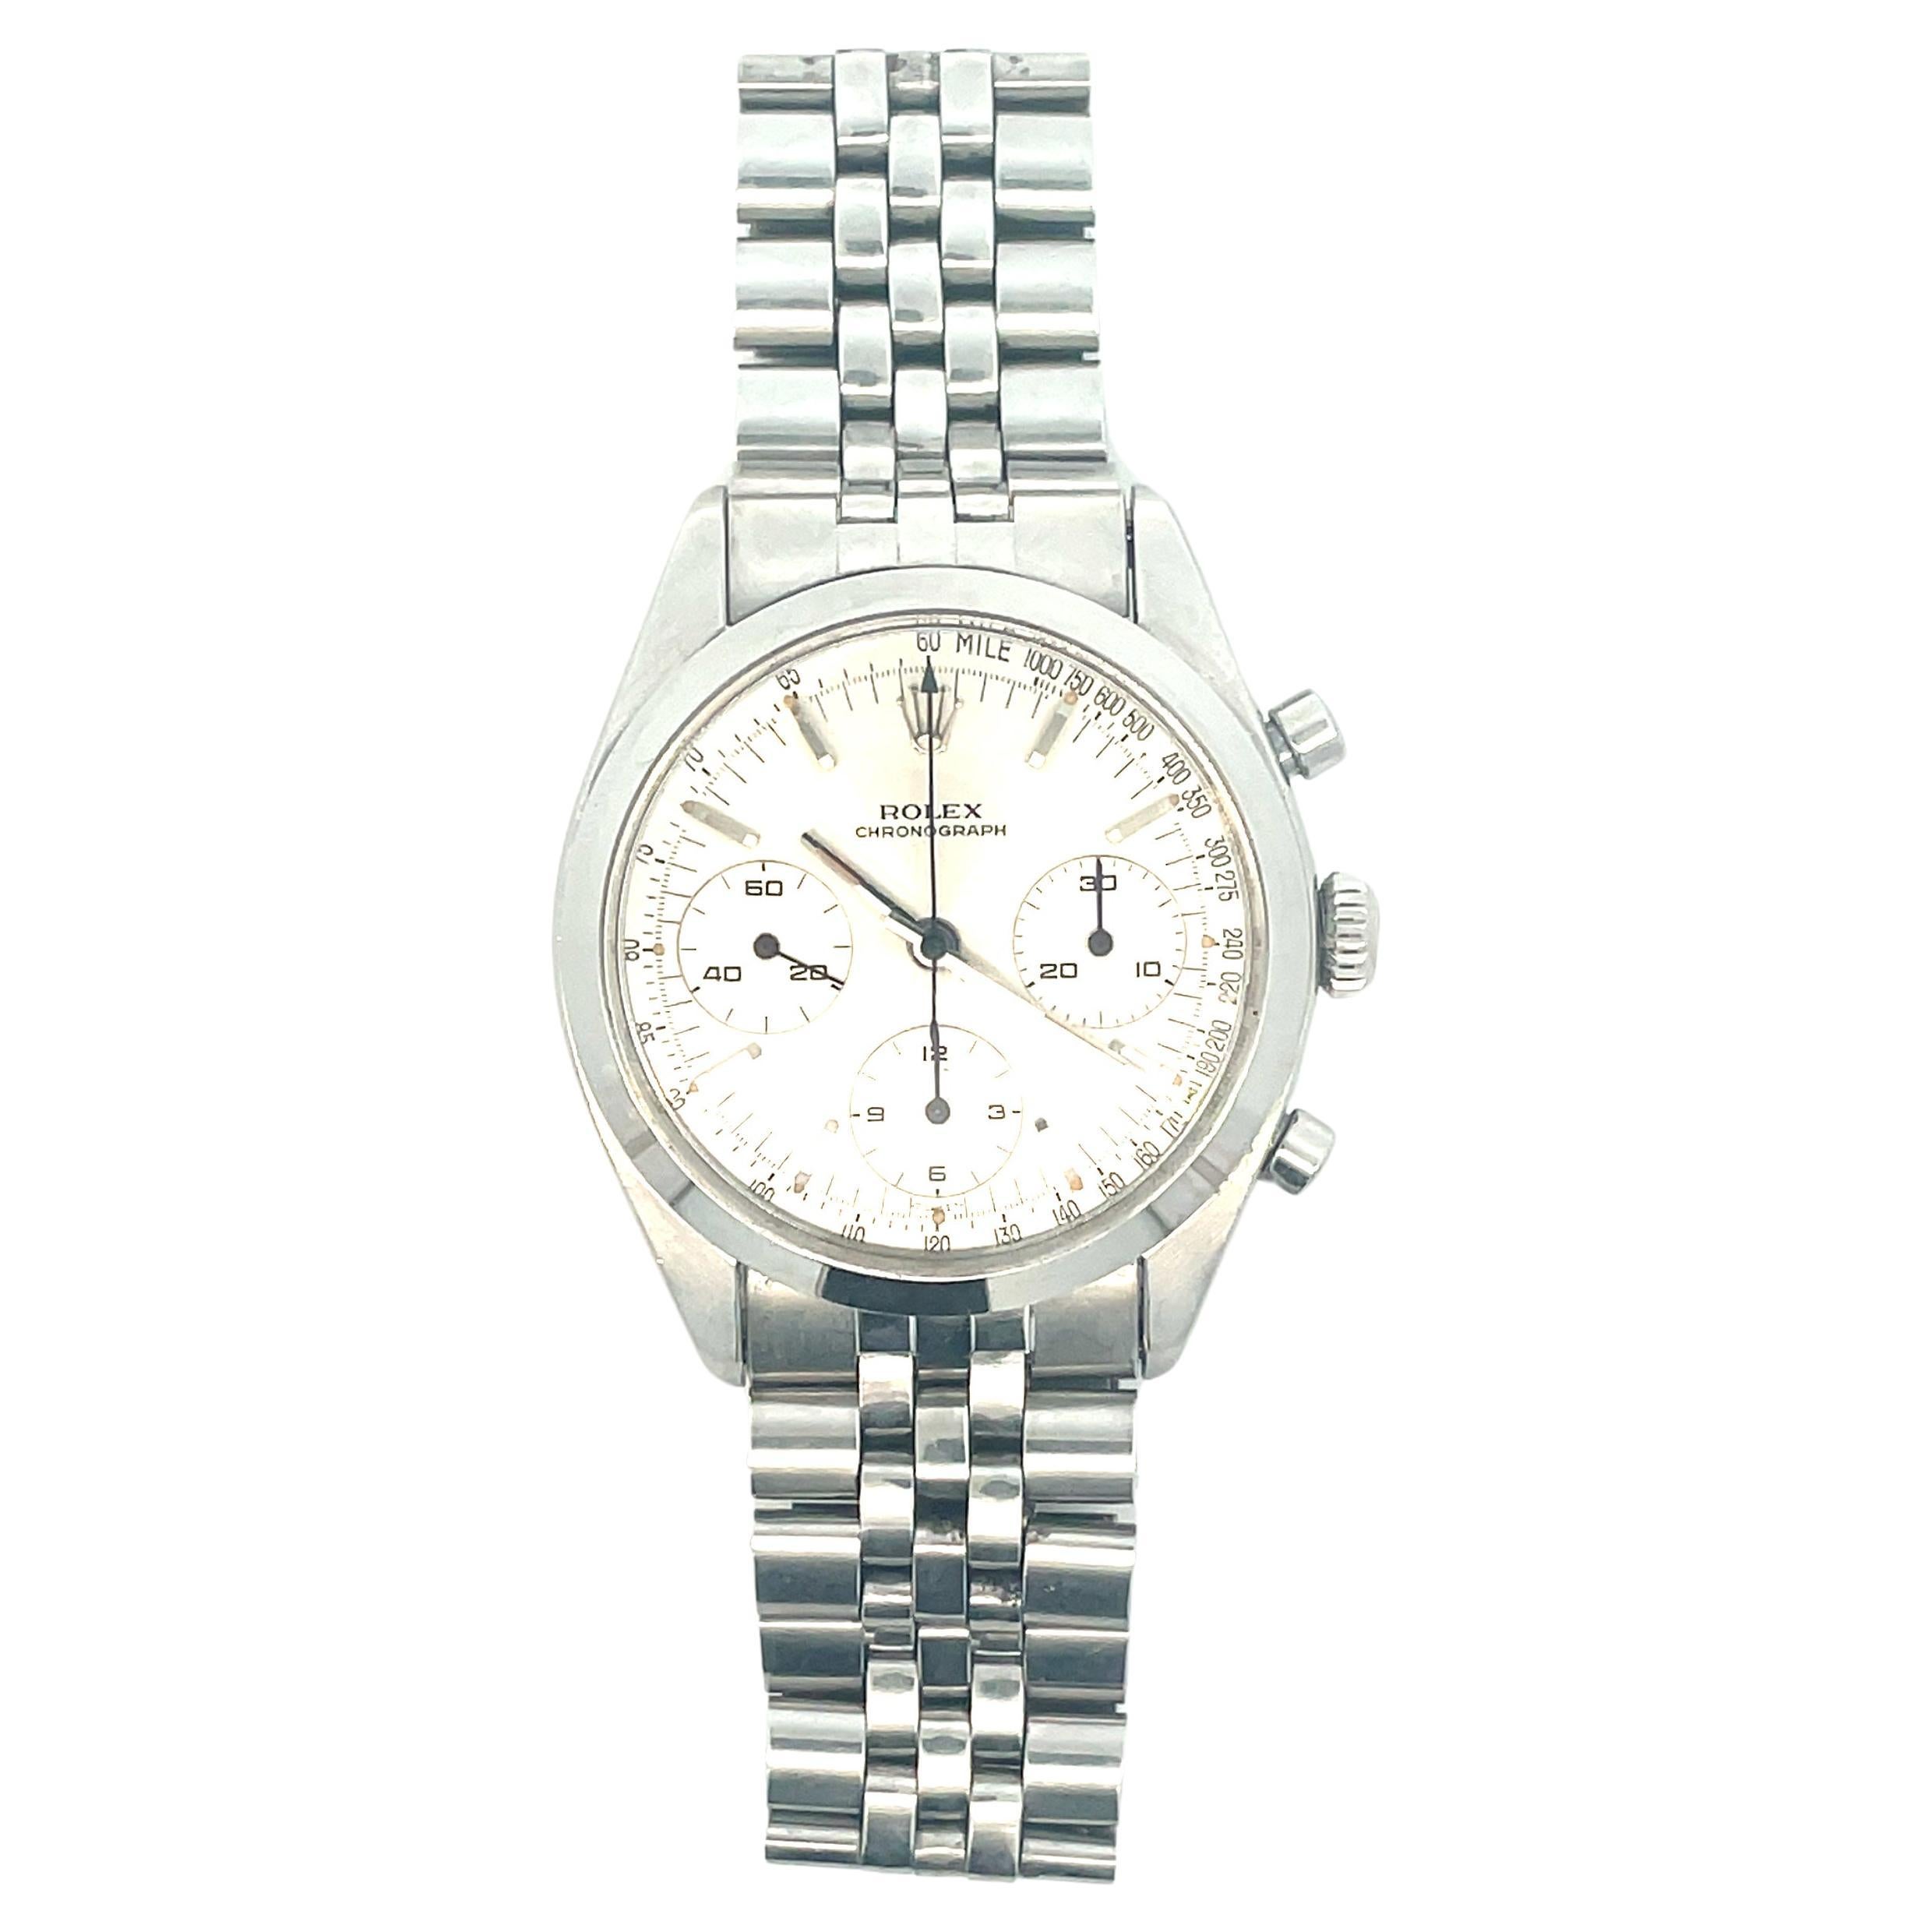 Rolex Vintage Chronograph Pre Daytona 6238 Watch never polished For Sale